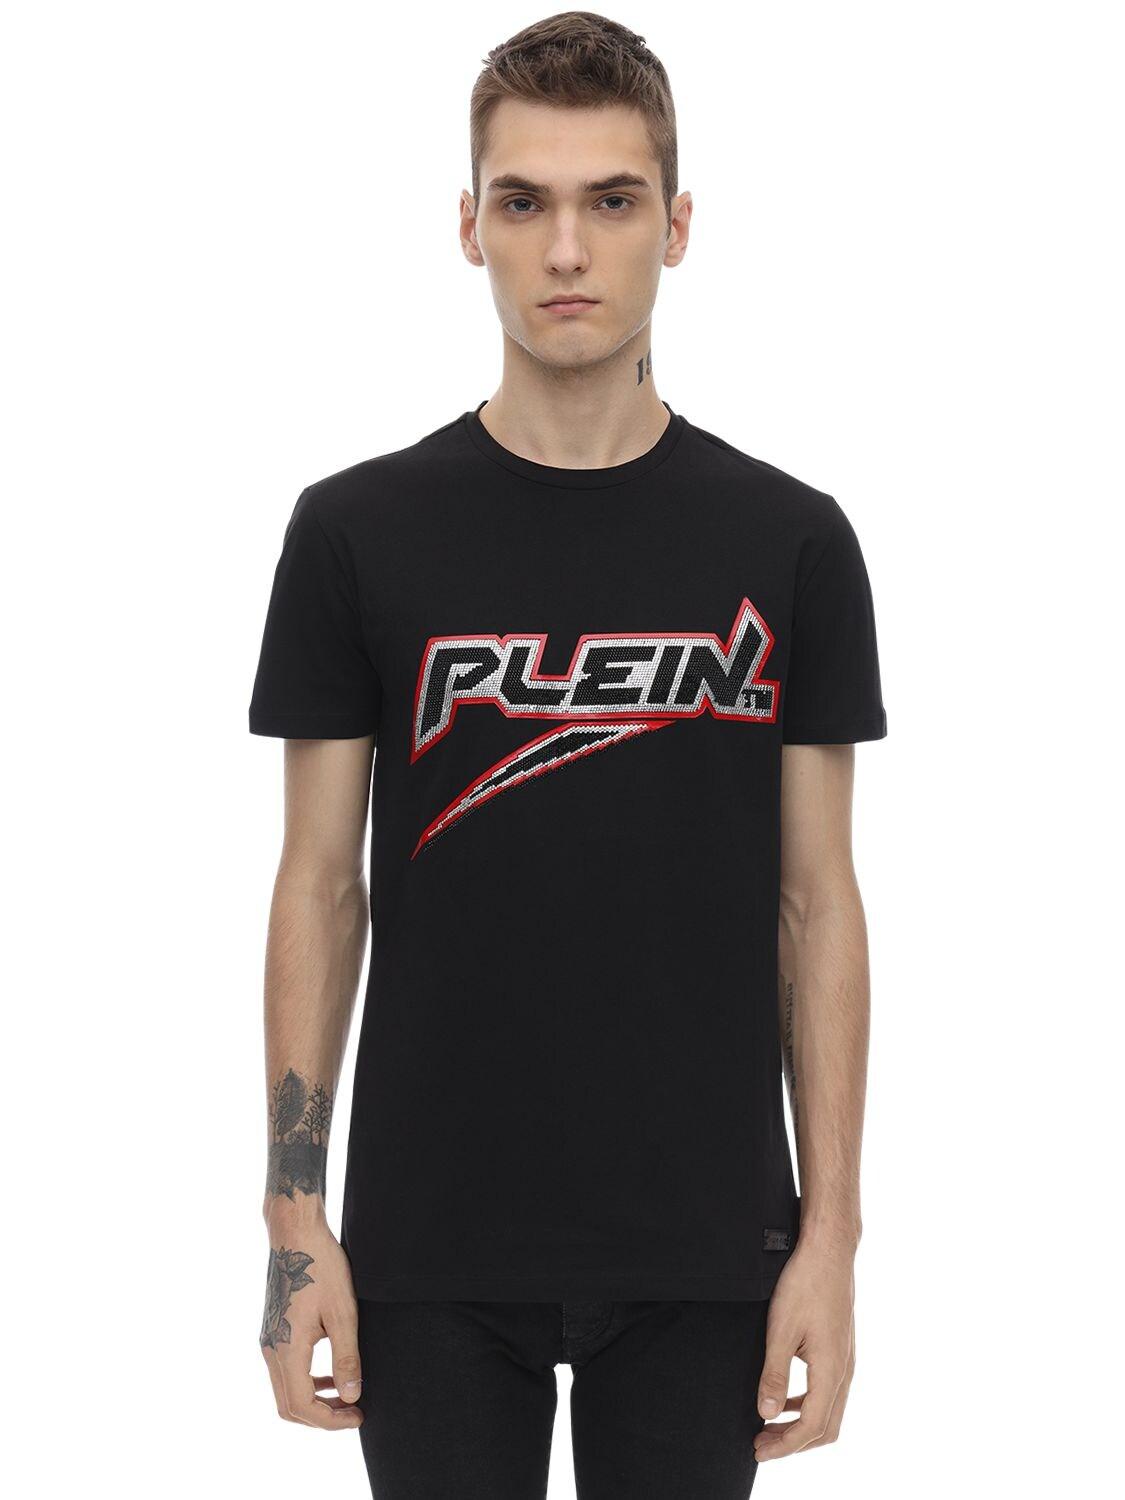 Philipp Plein Embellished Cotton Jersey T-shirt in Black for Men - Lyst